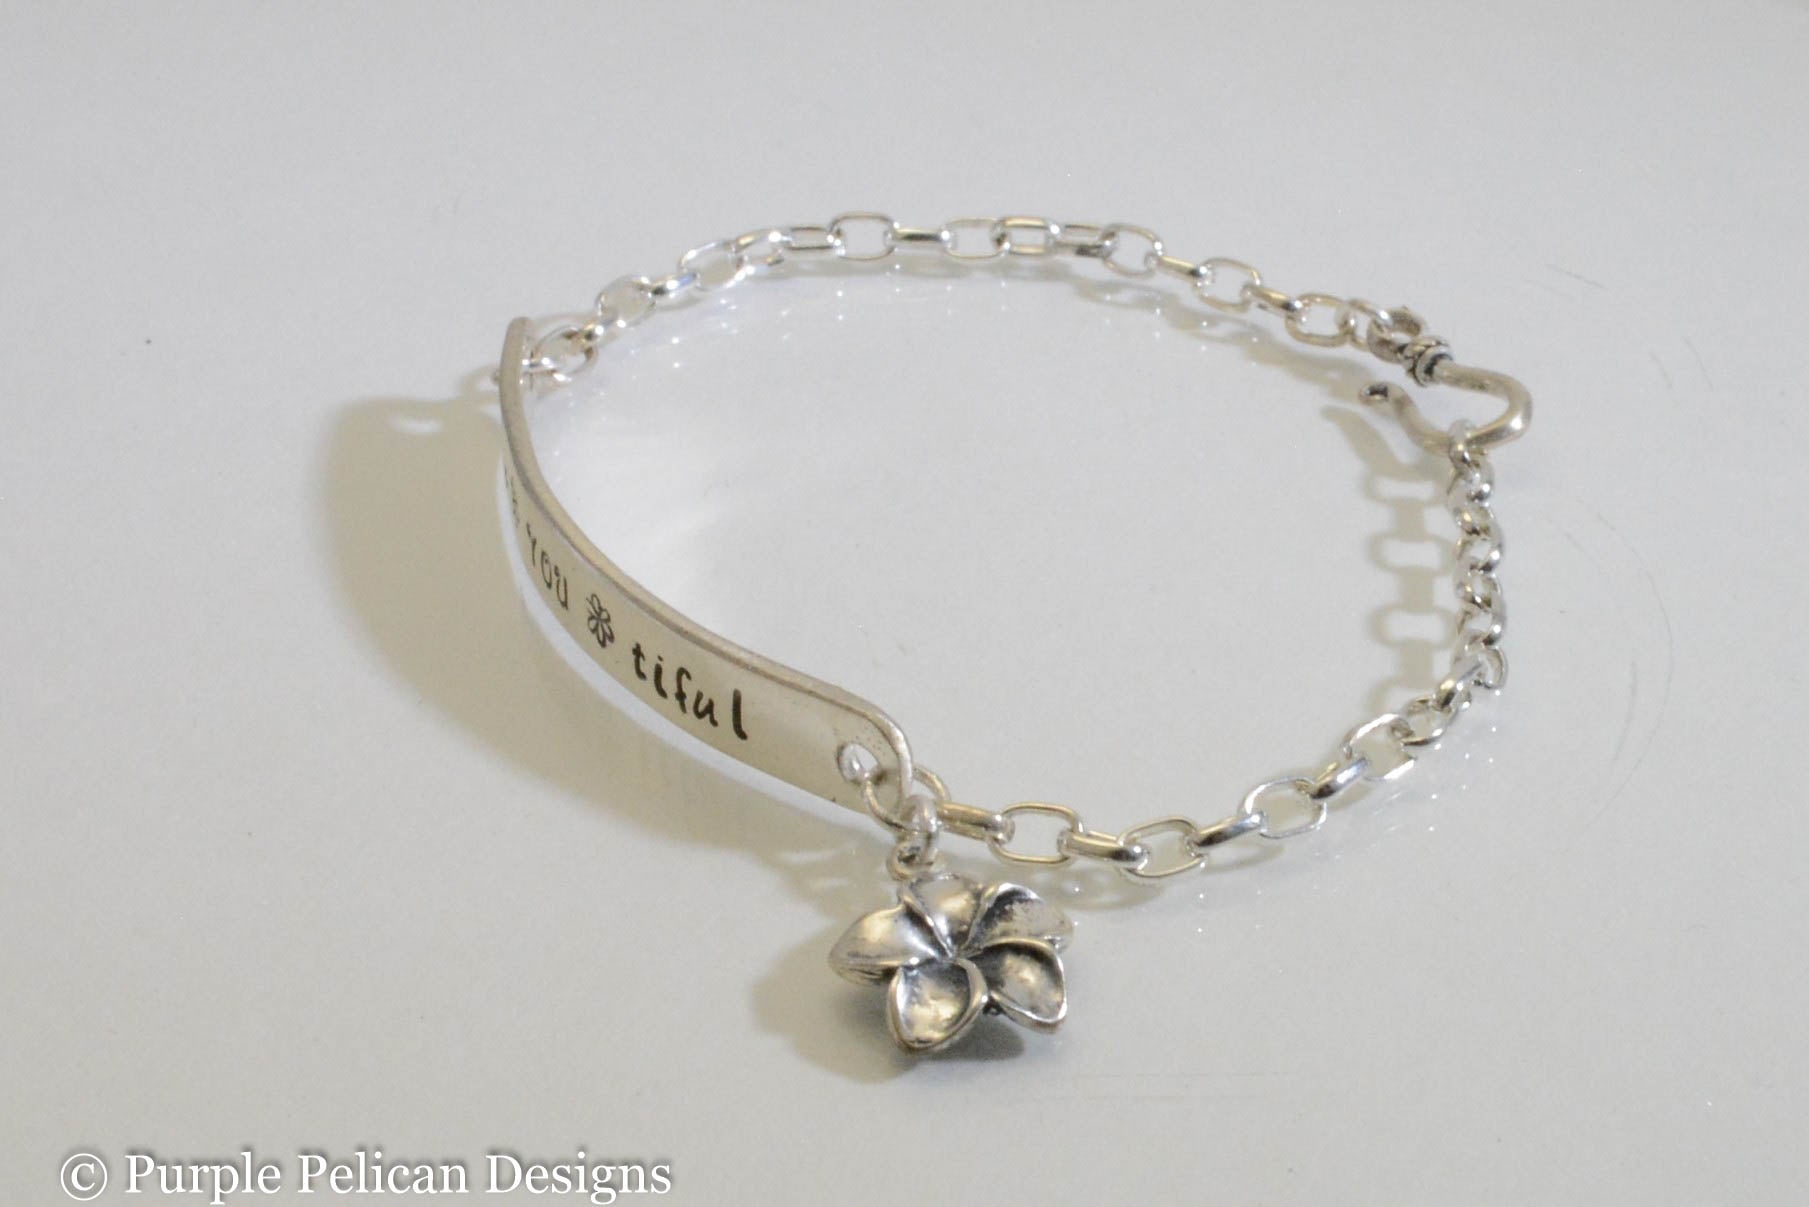 Be You Nique Sterling Silver Chain Bracelet - Purple Pelican Designs